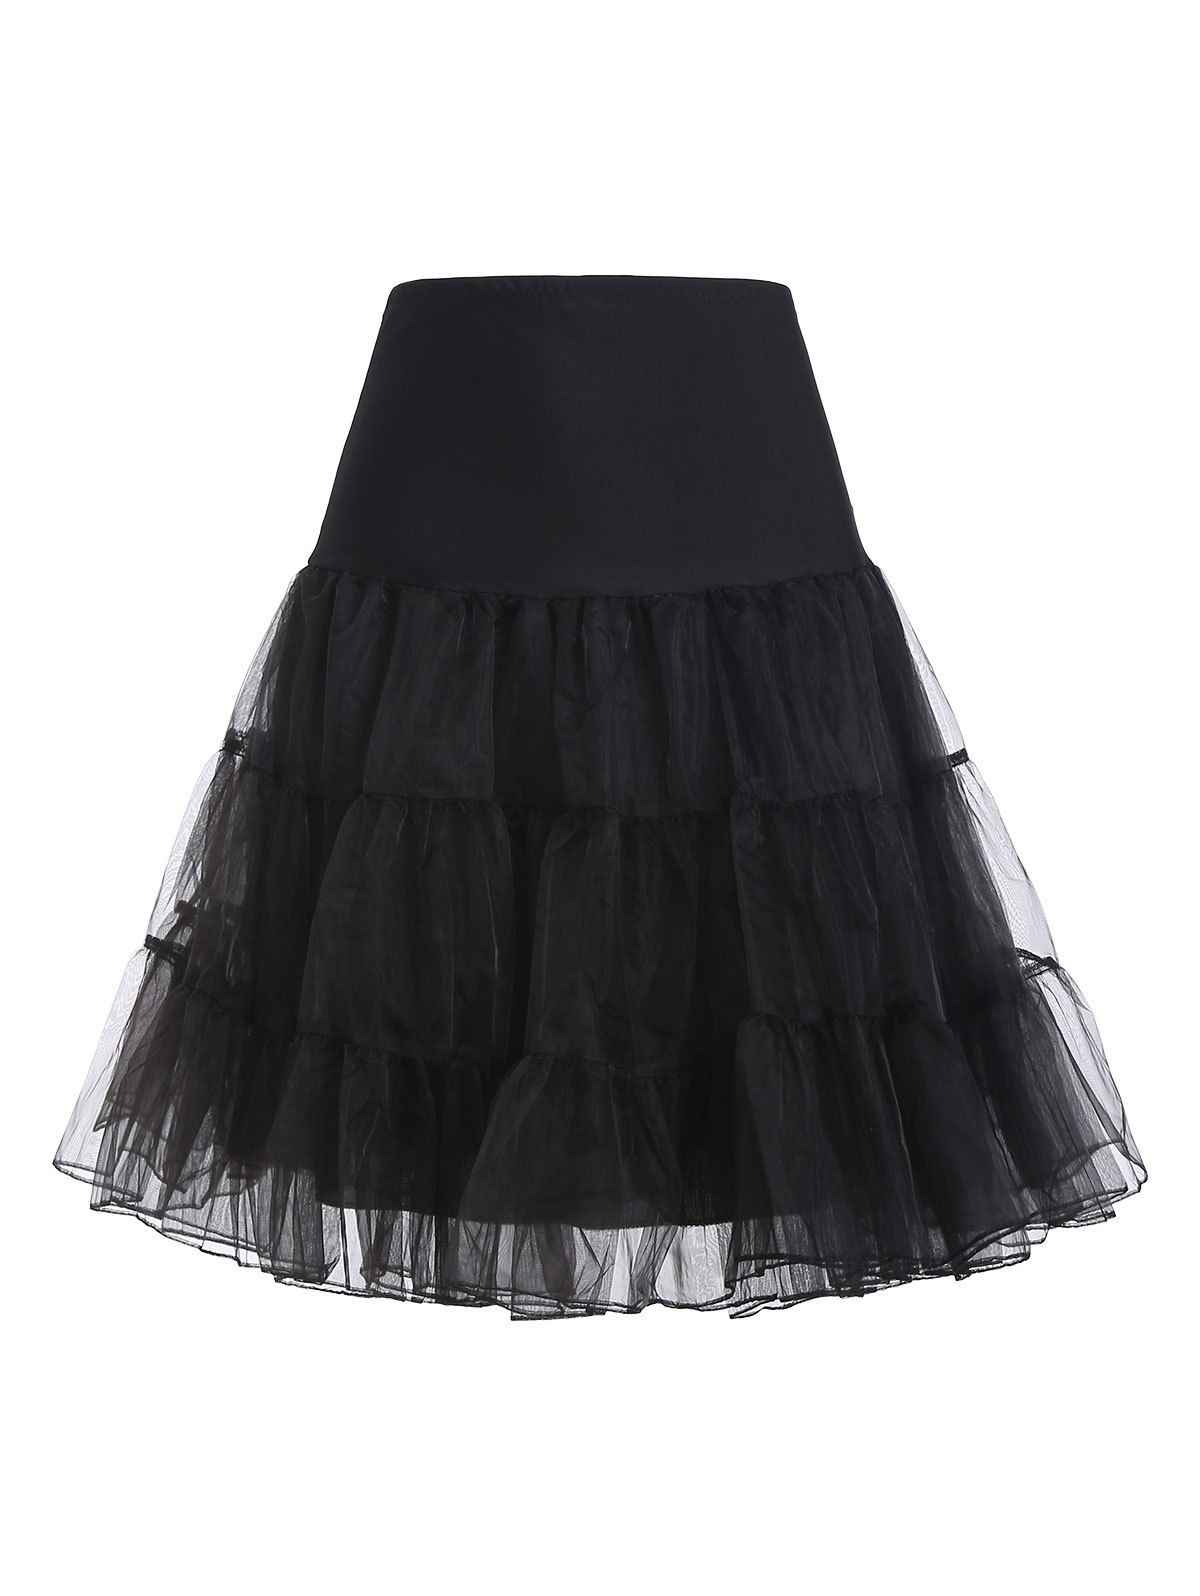 Organza Layered Skirt - BLACK S